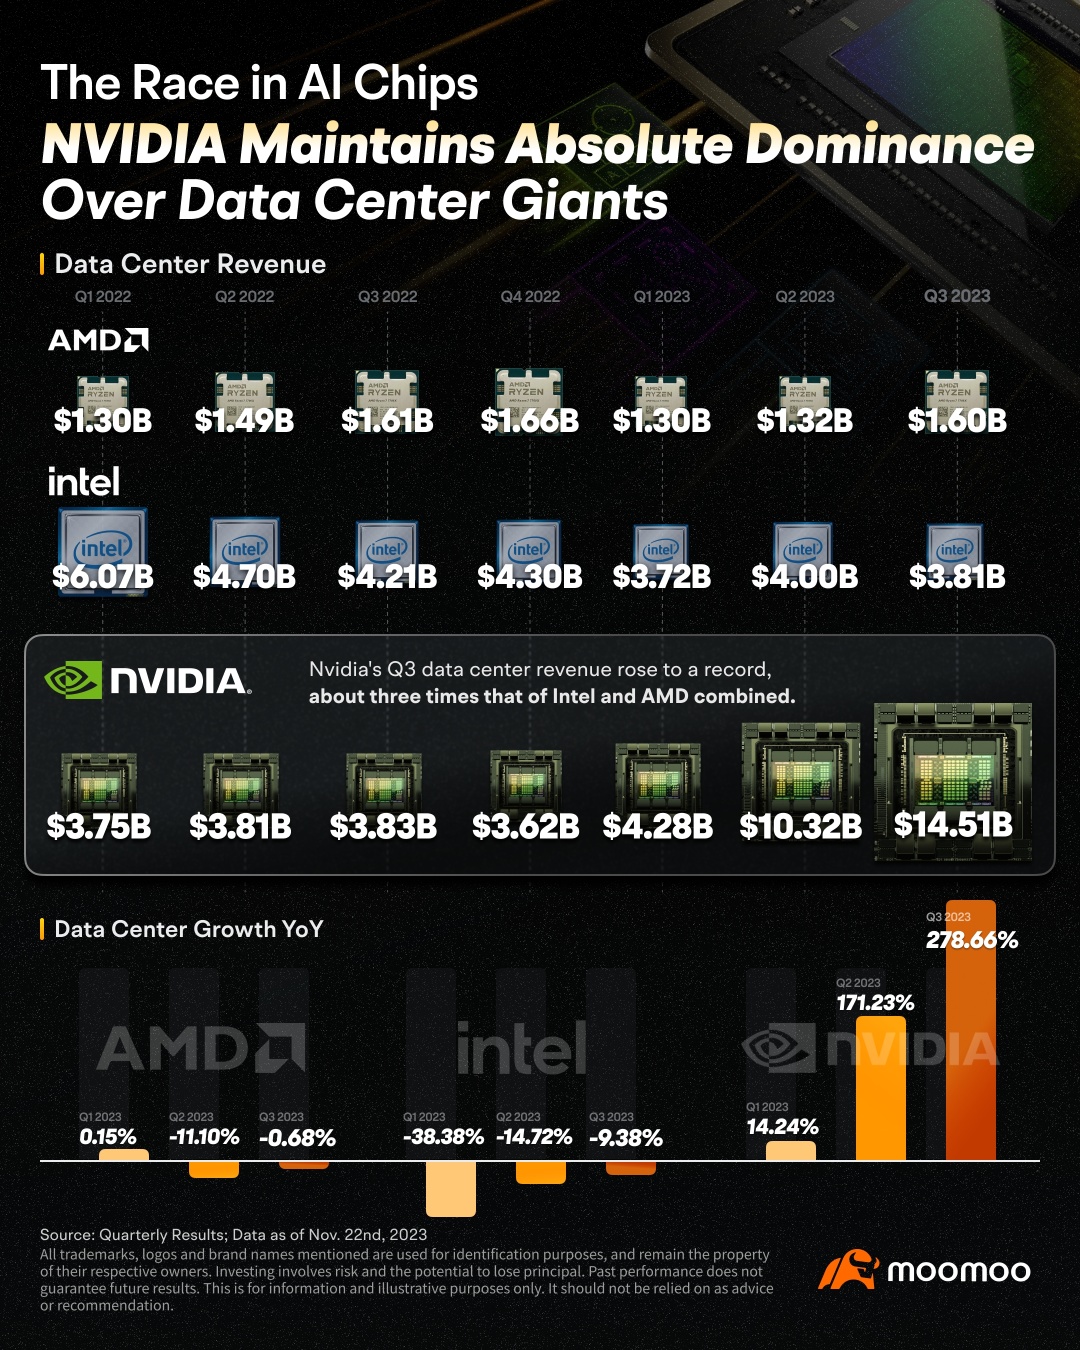 Nvidiaの株価が下落した理由は、業績が予想を上回ったにもかかわらずです。